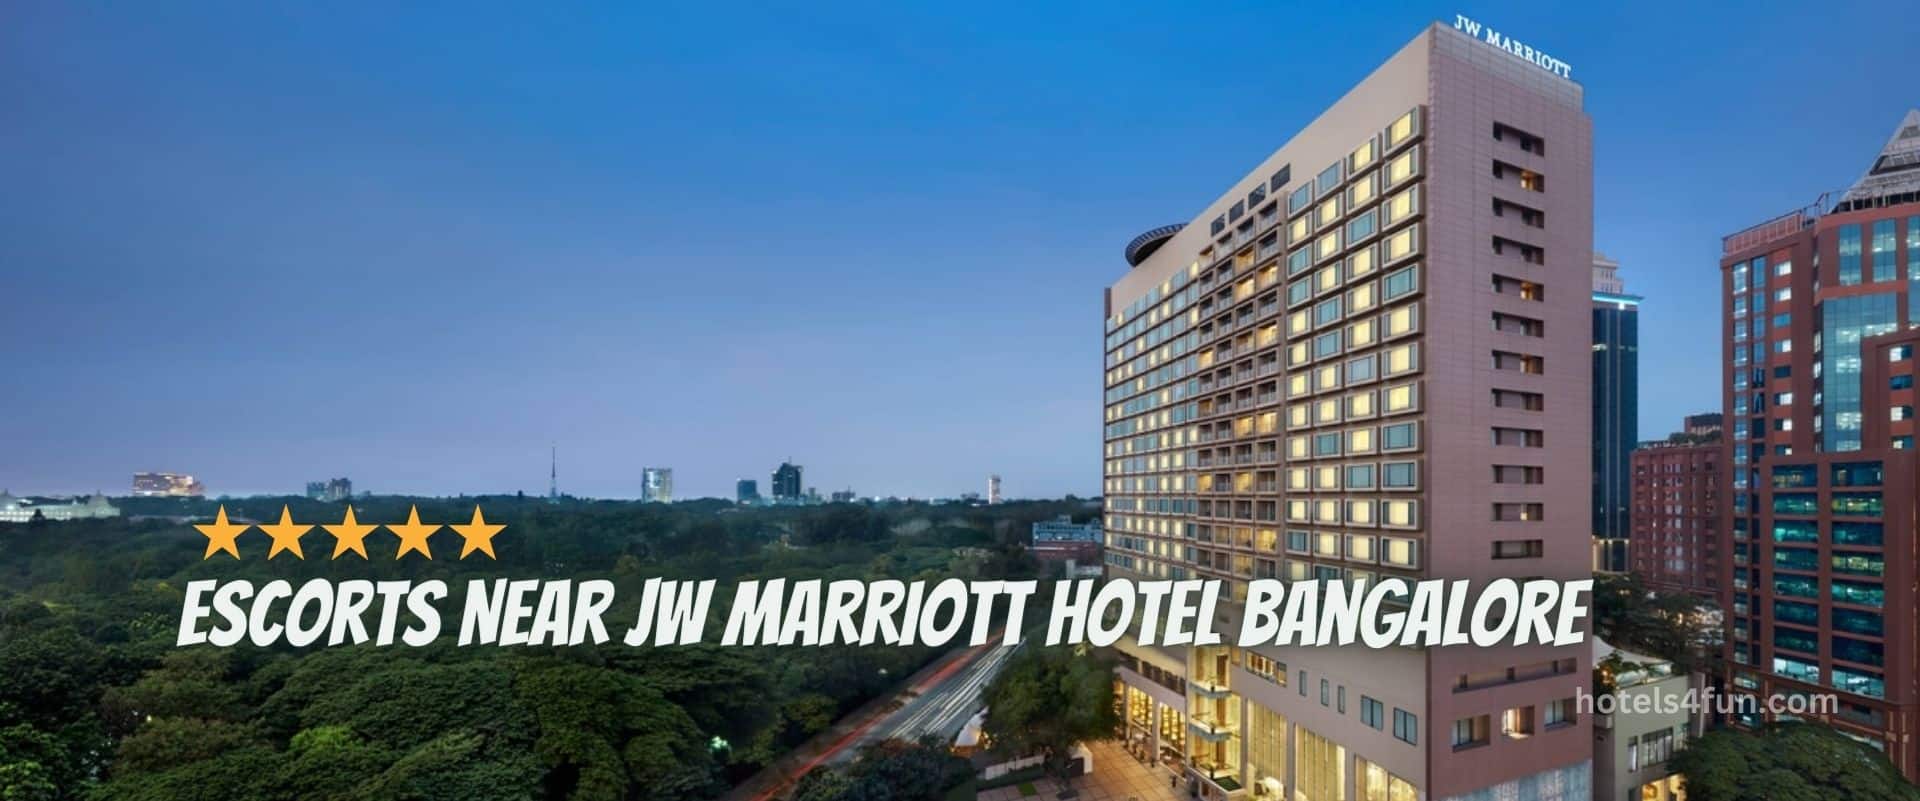 JW Marriott Hotel Bangalore